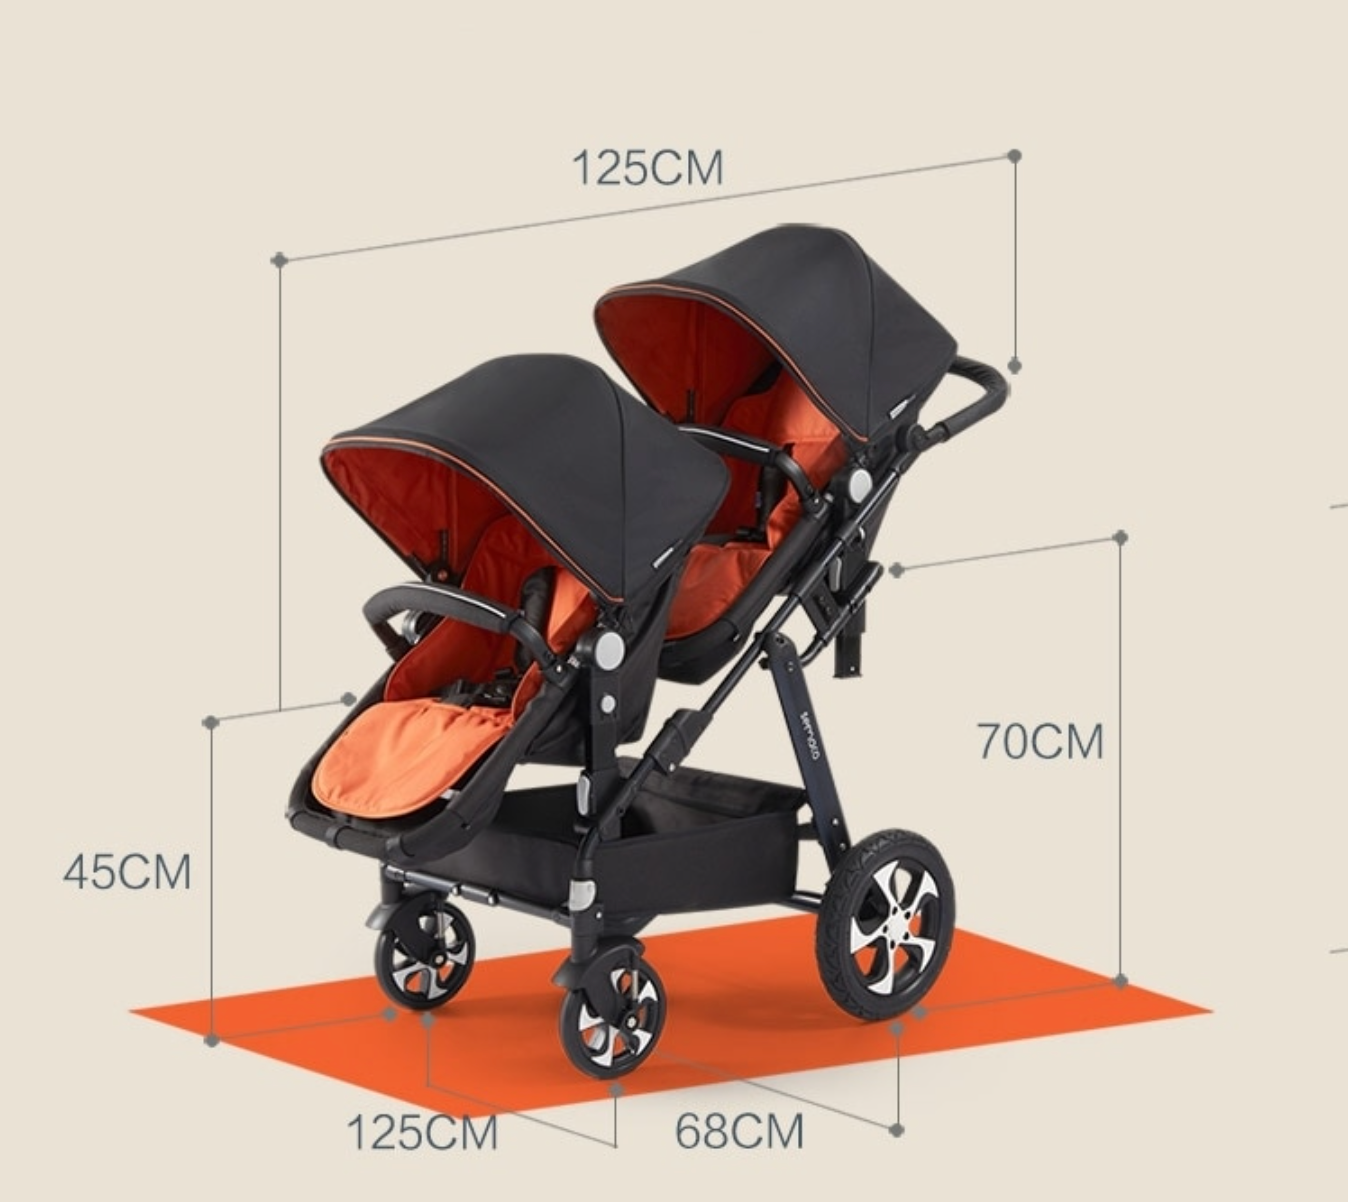 ecohunch Twin Luxury baby stroller